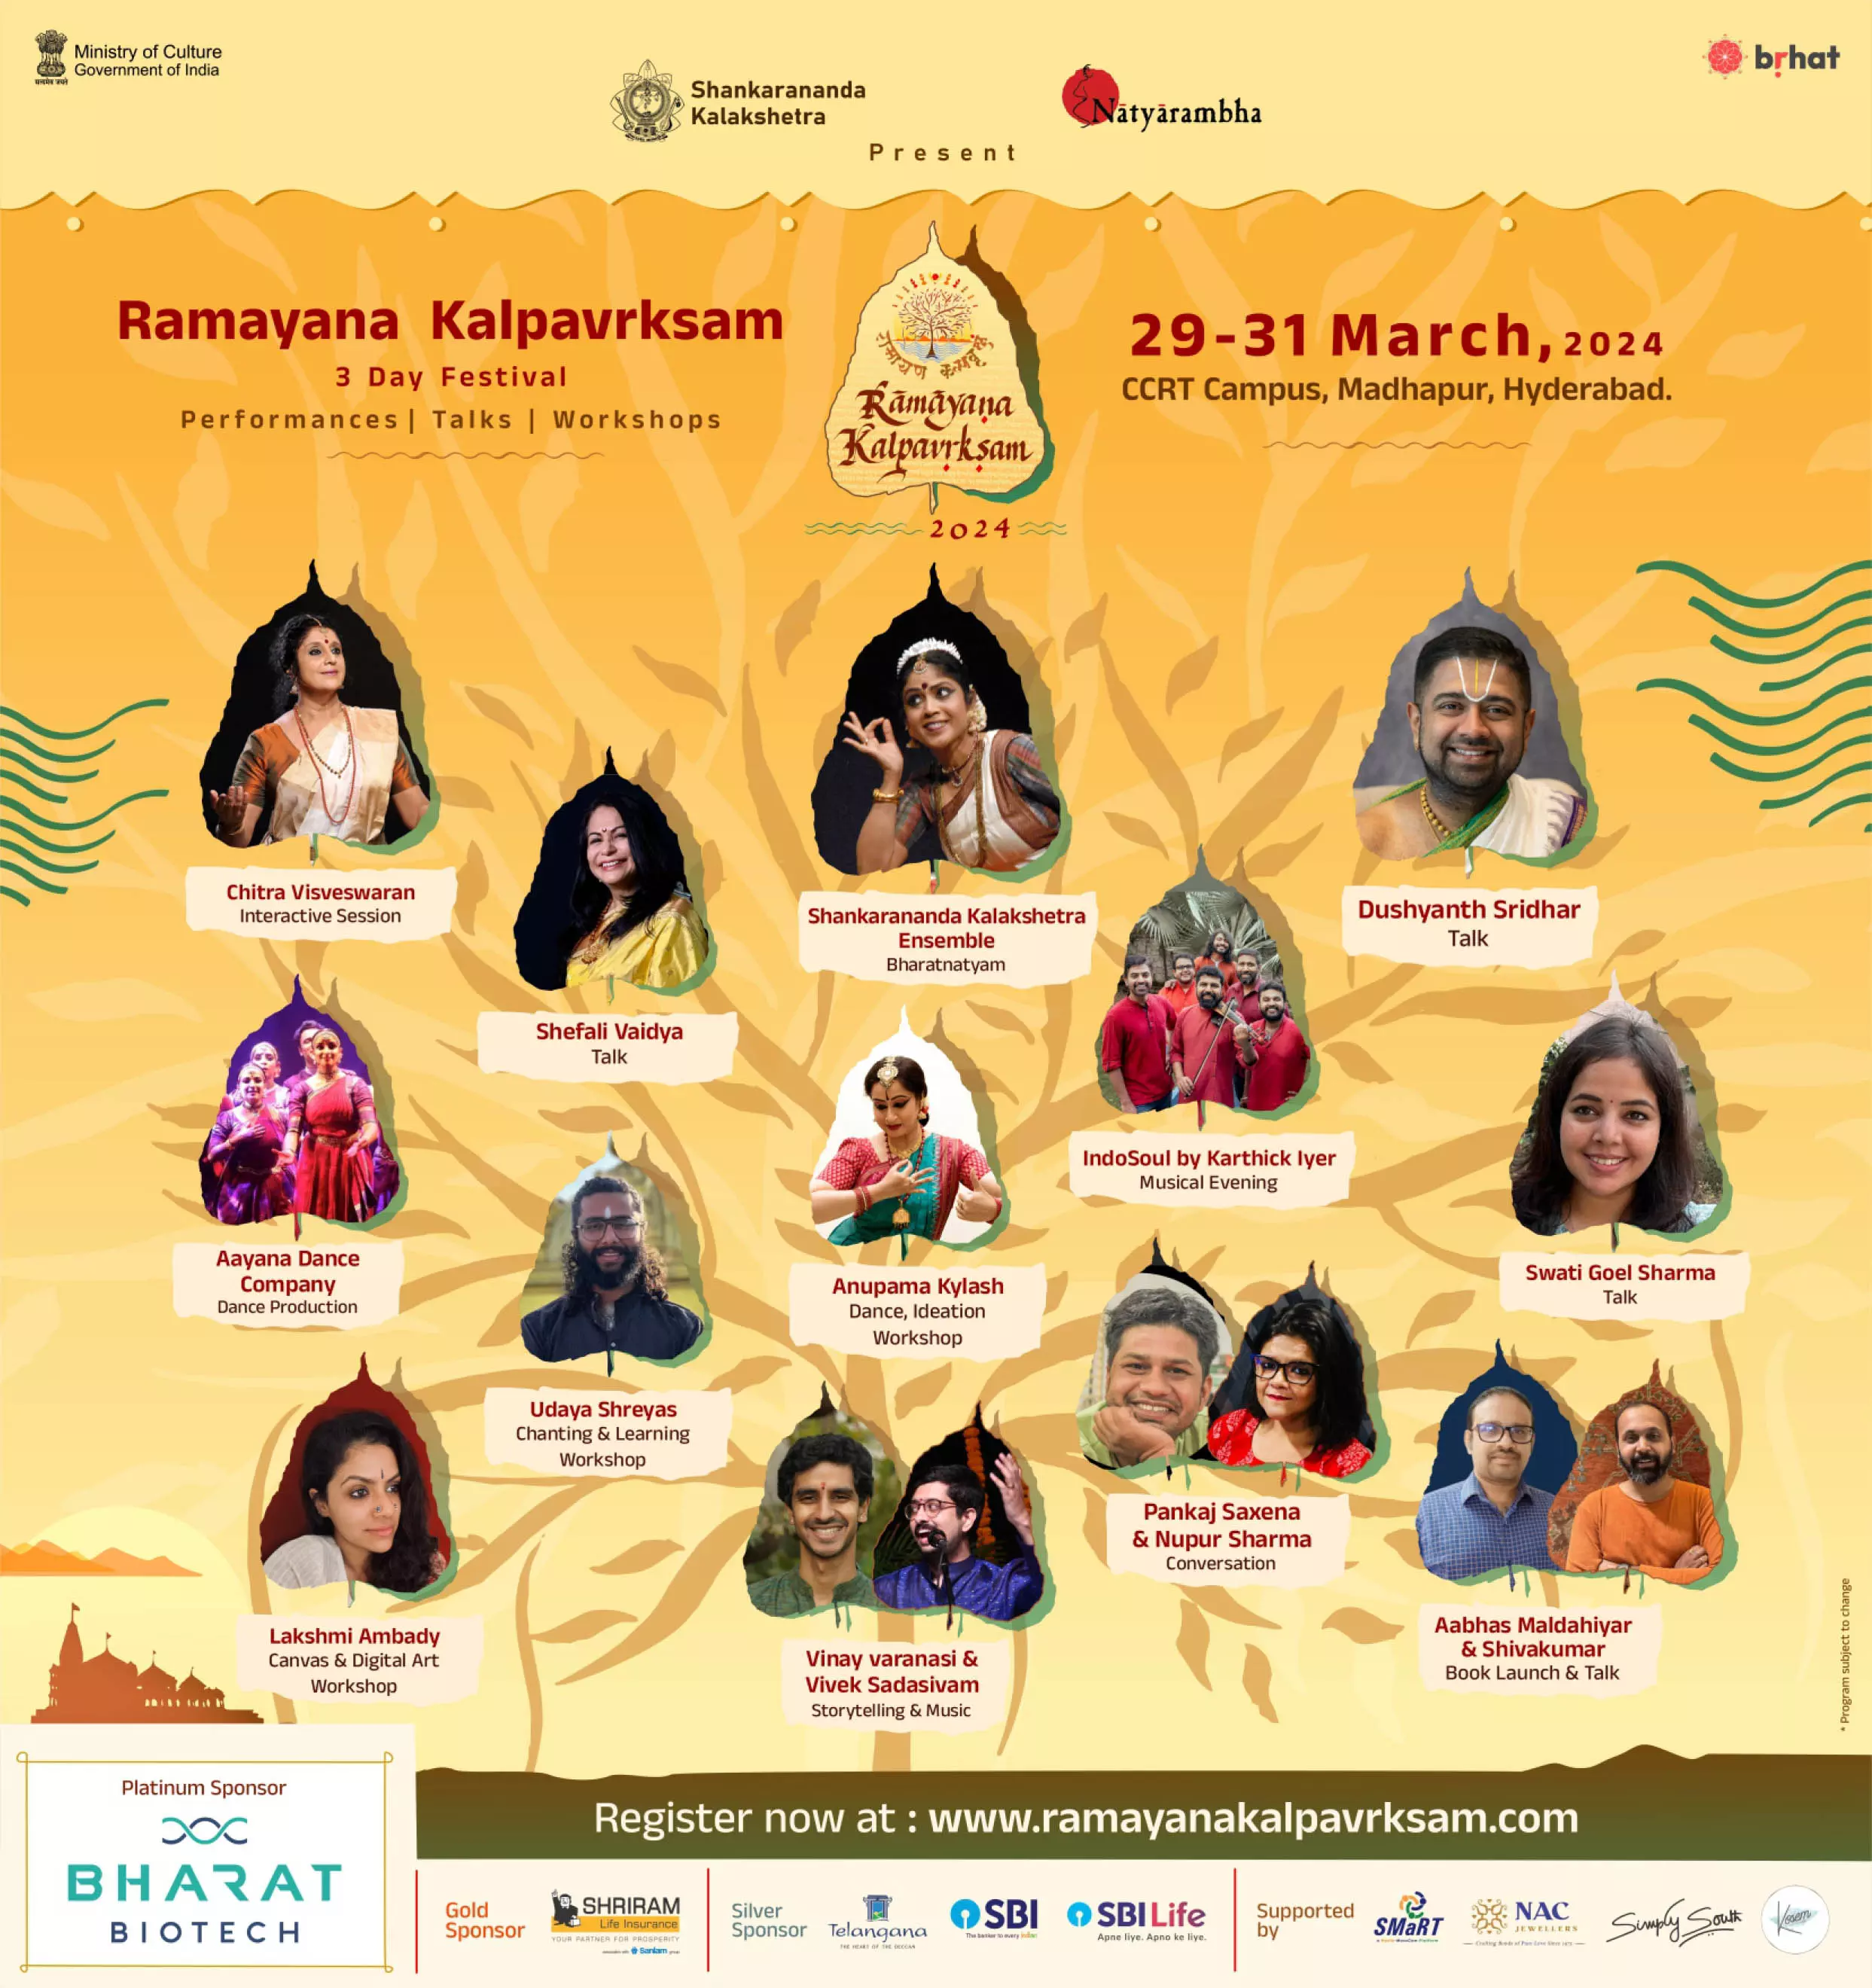 Hyderabad to witness a three-day music and dance extravaganza - Ramayana Kalpavrksam!